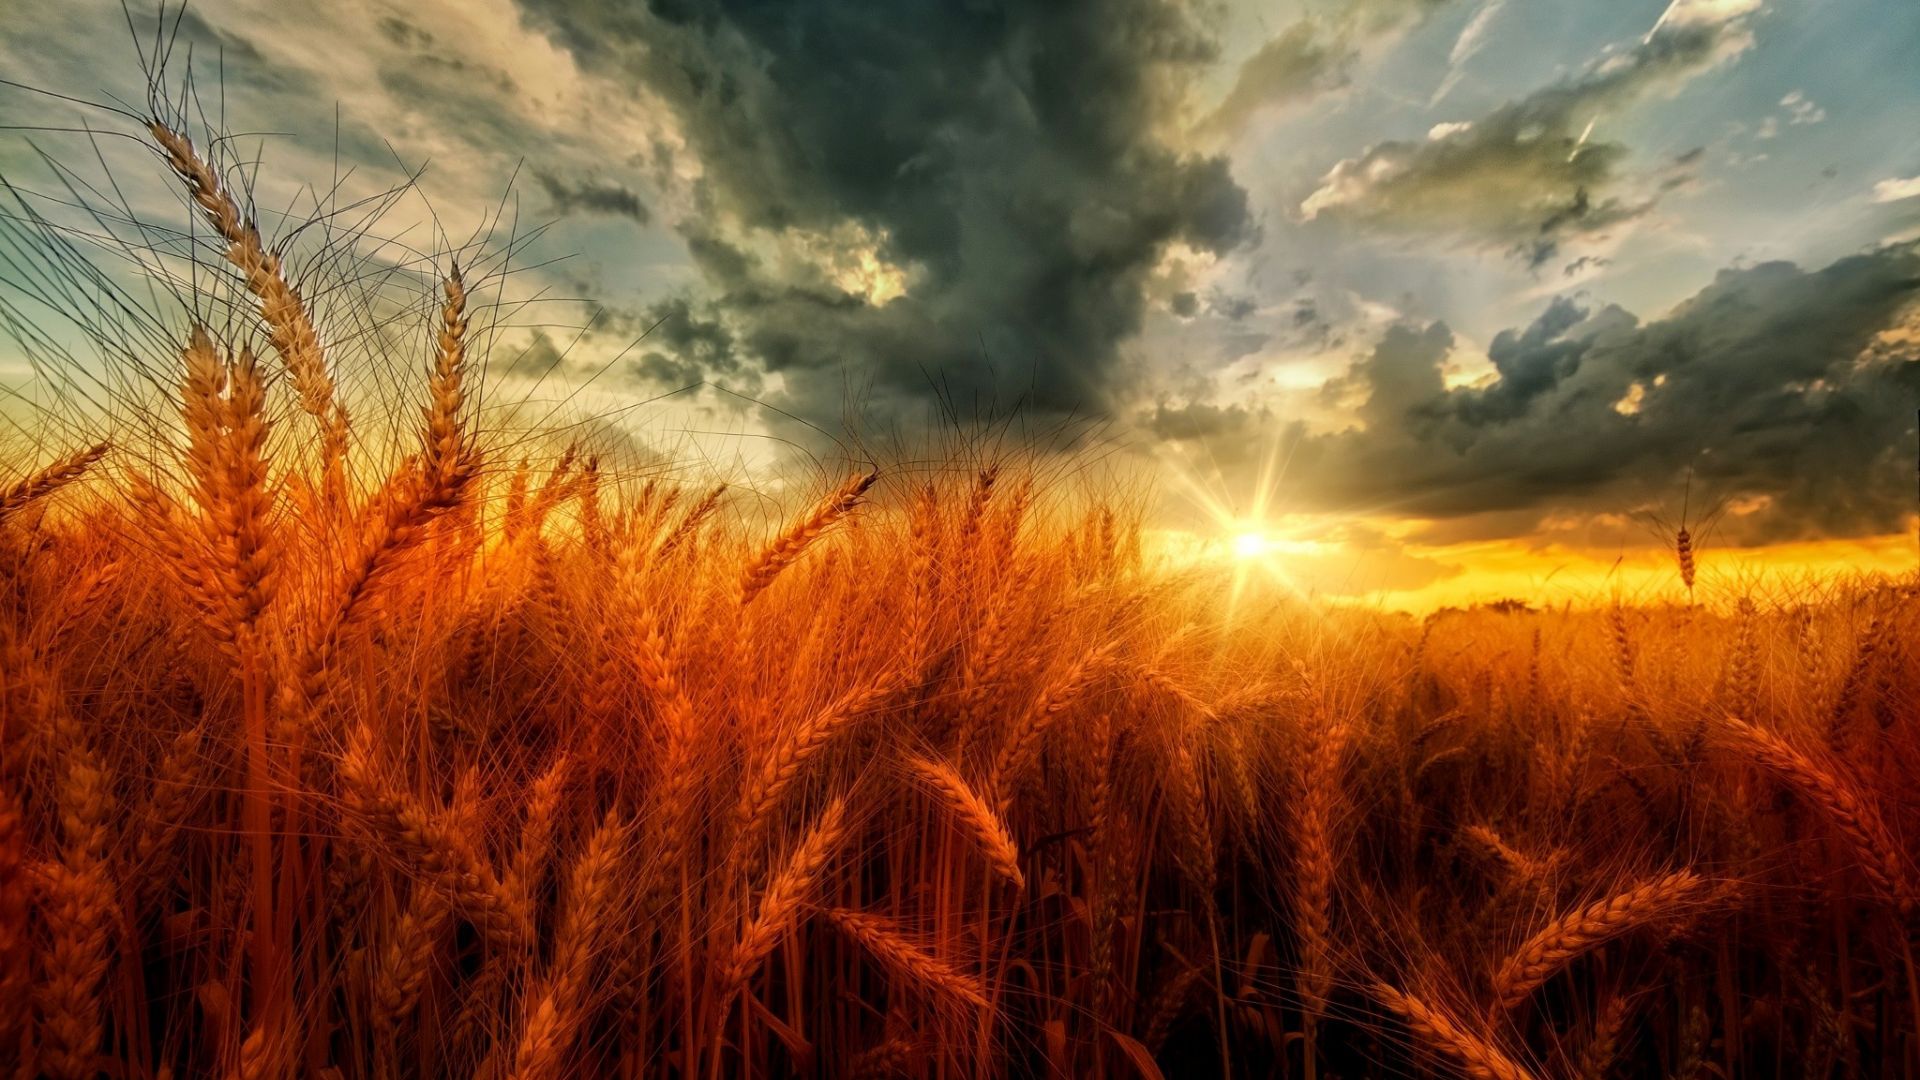 Desktop Wallpaper Sunset, Golden Wheat Field, Hd Image, Picture,  Background, 7s6dlo